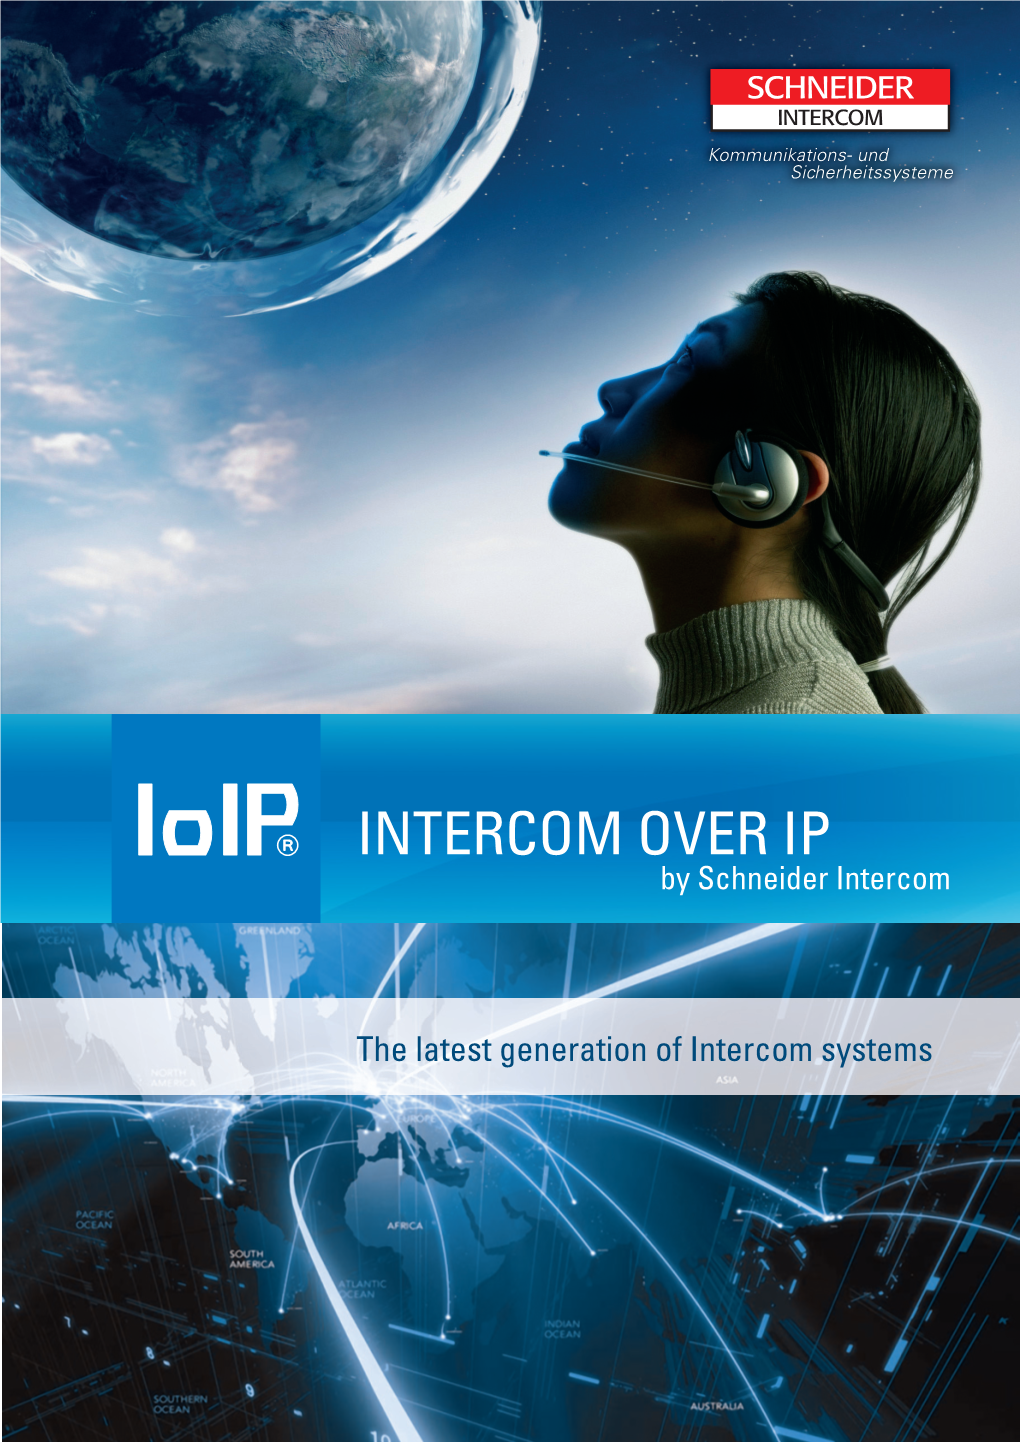 INTERCOM OVER IP by Schneider Intercom